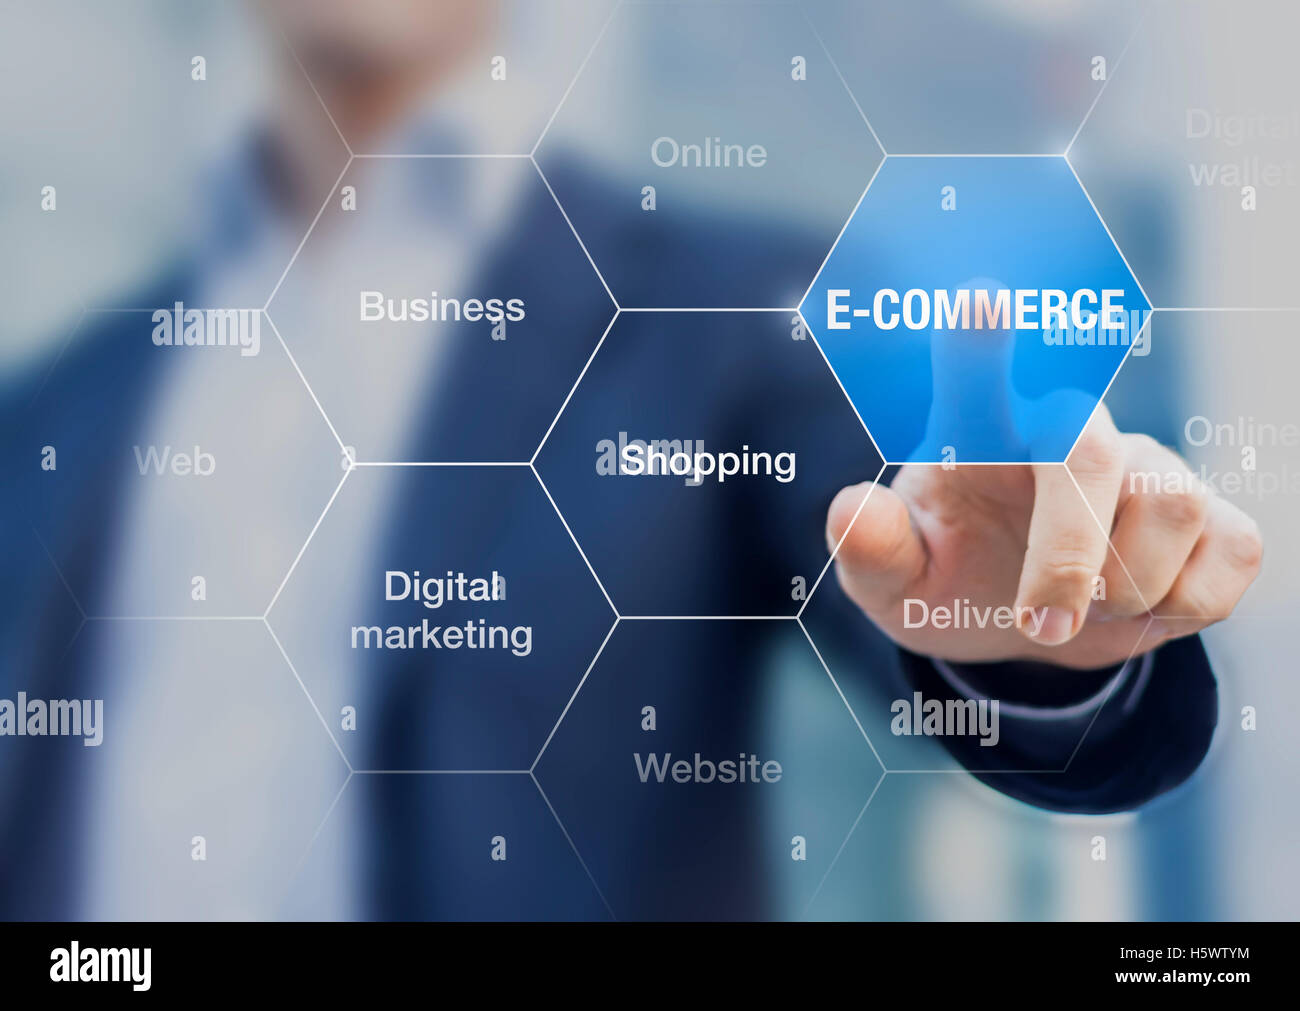 Businessman presenting e-commerce concept, online shopping using internet technologies Stock Photo